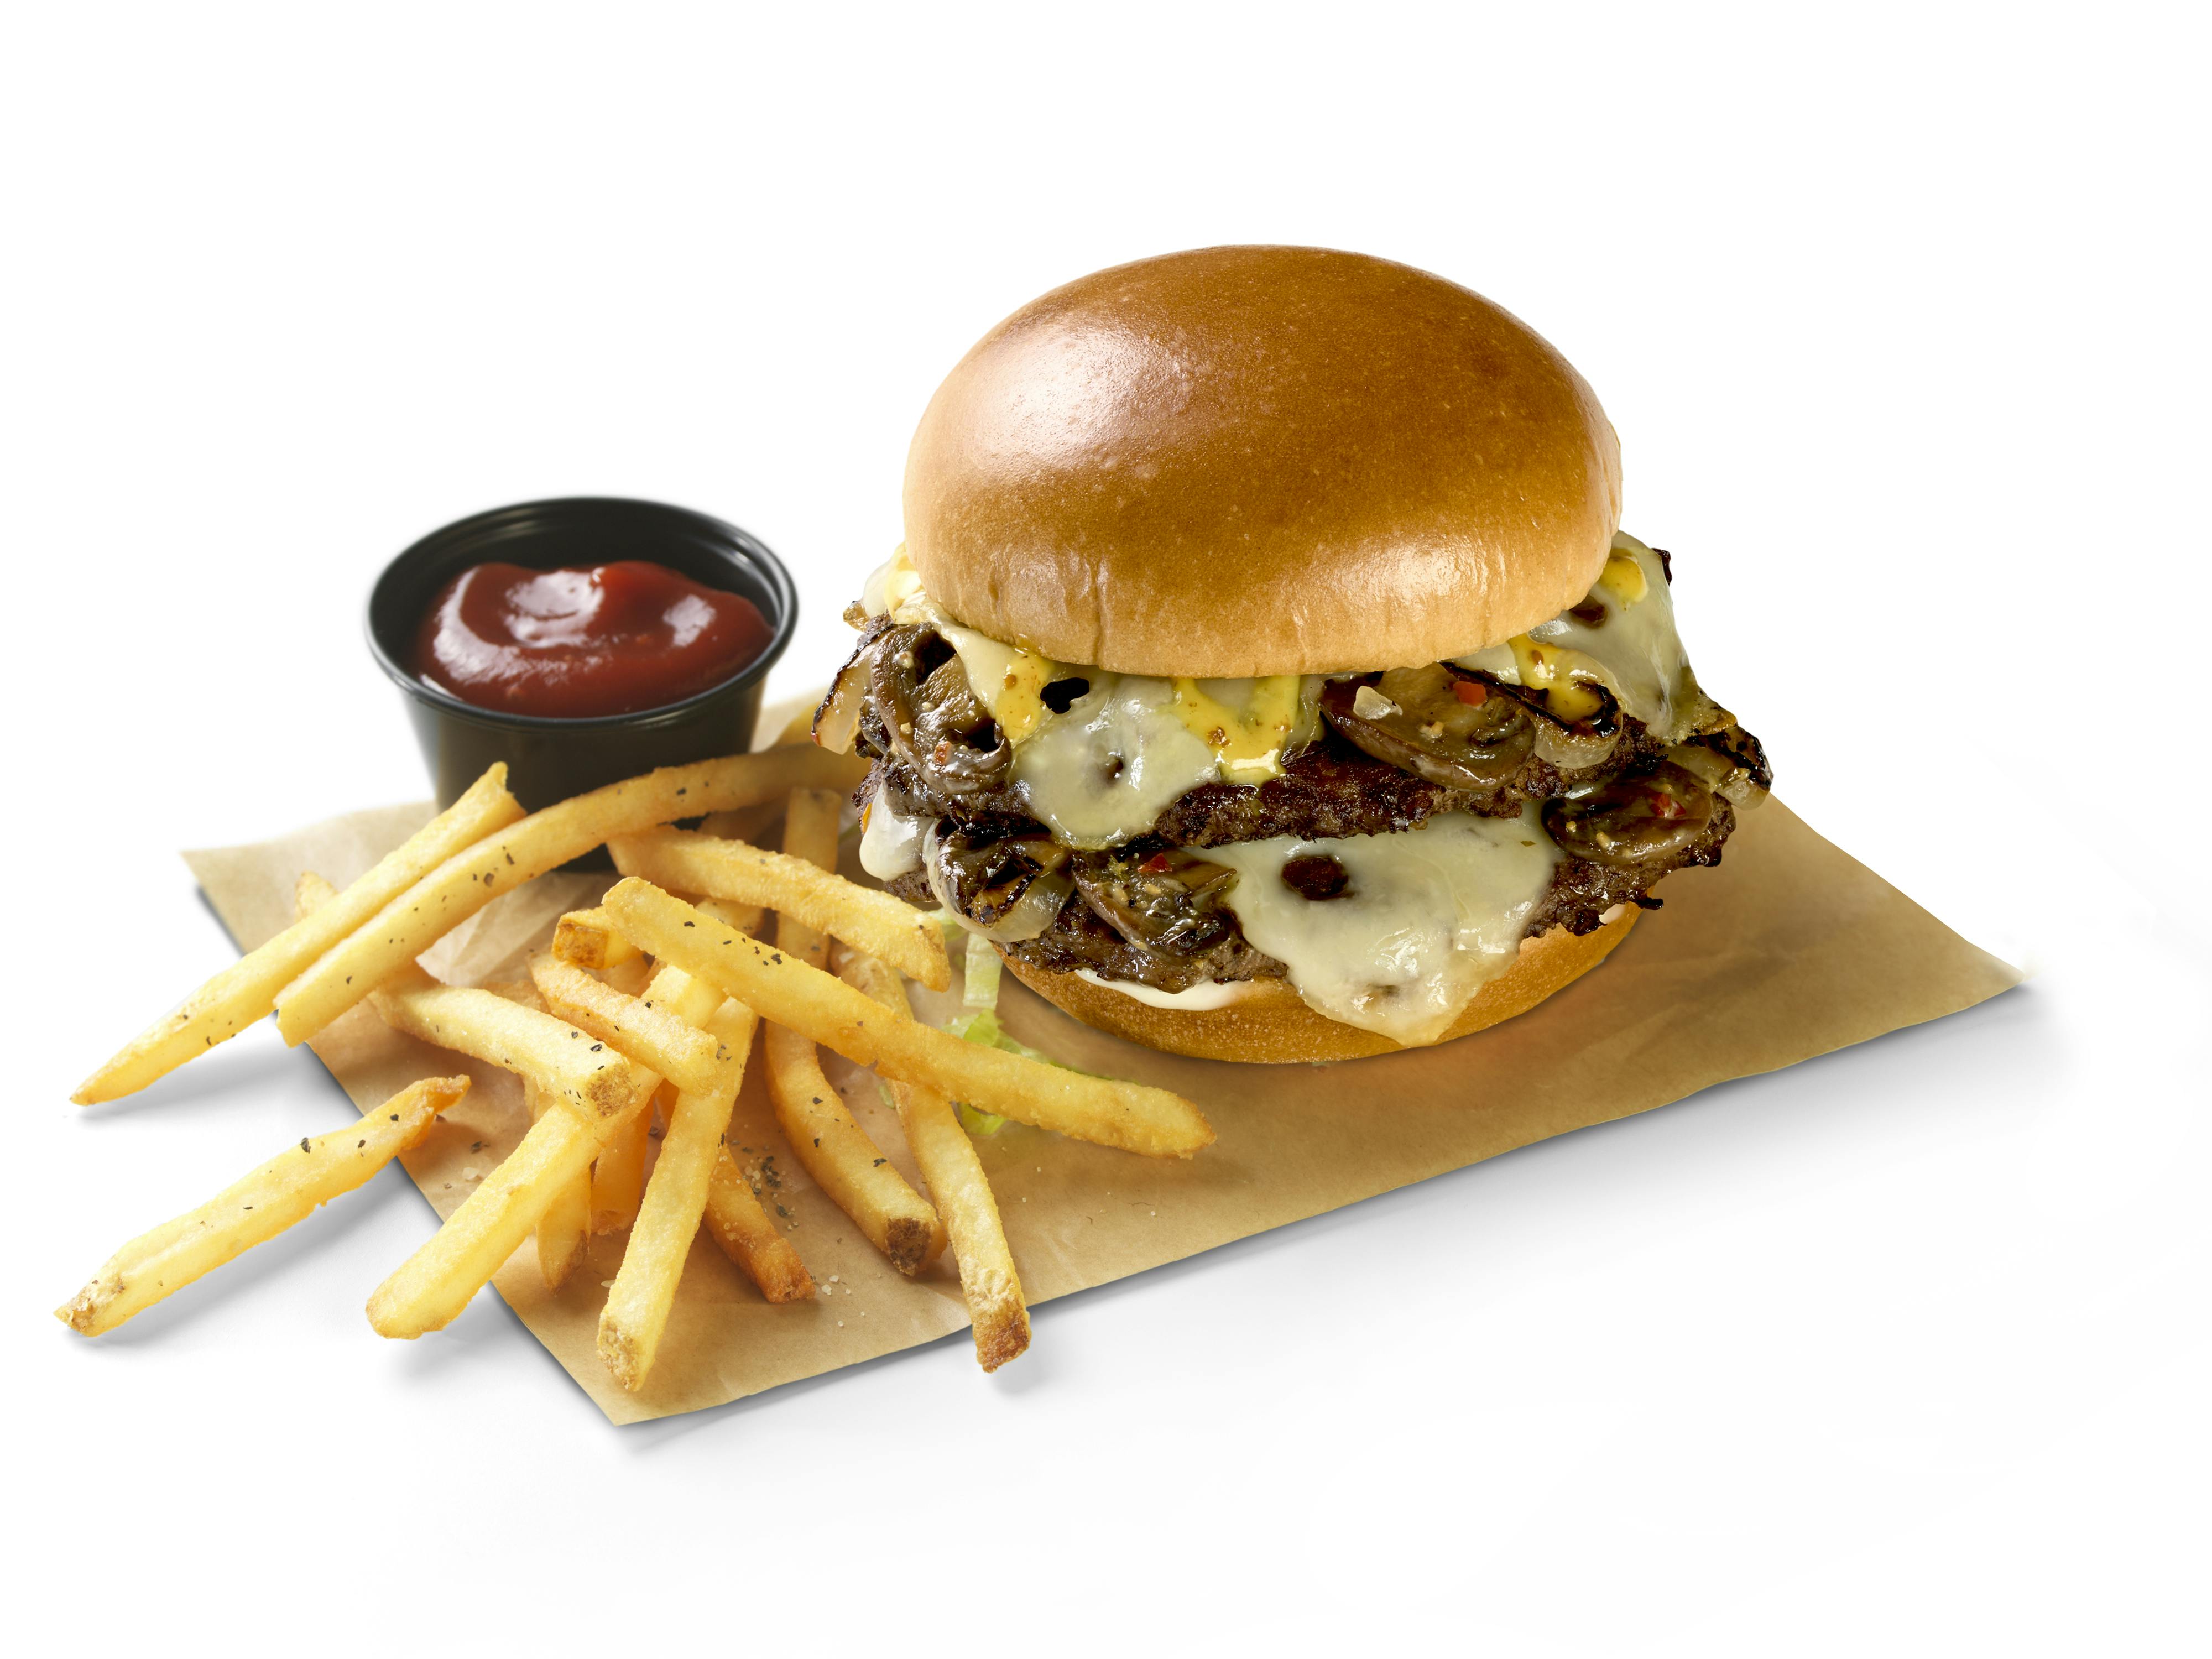 Mushroom Swiss Burger from Buffalo Wild Wings - W San Marcos Blvd in San Marcos, CA